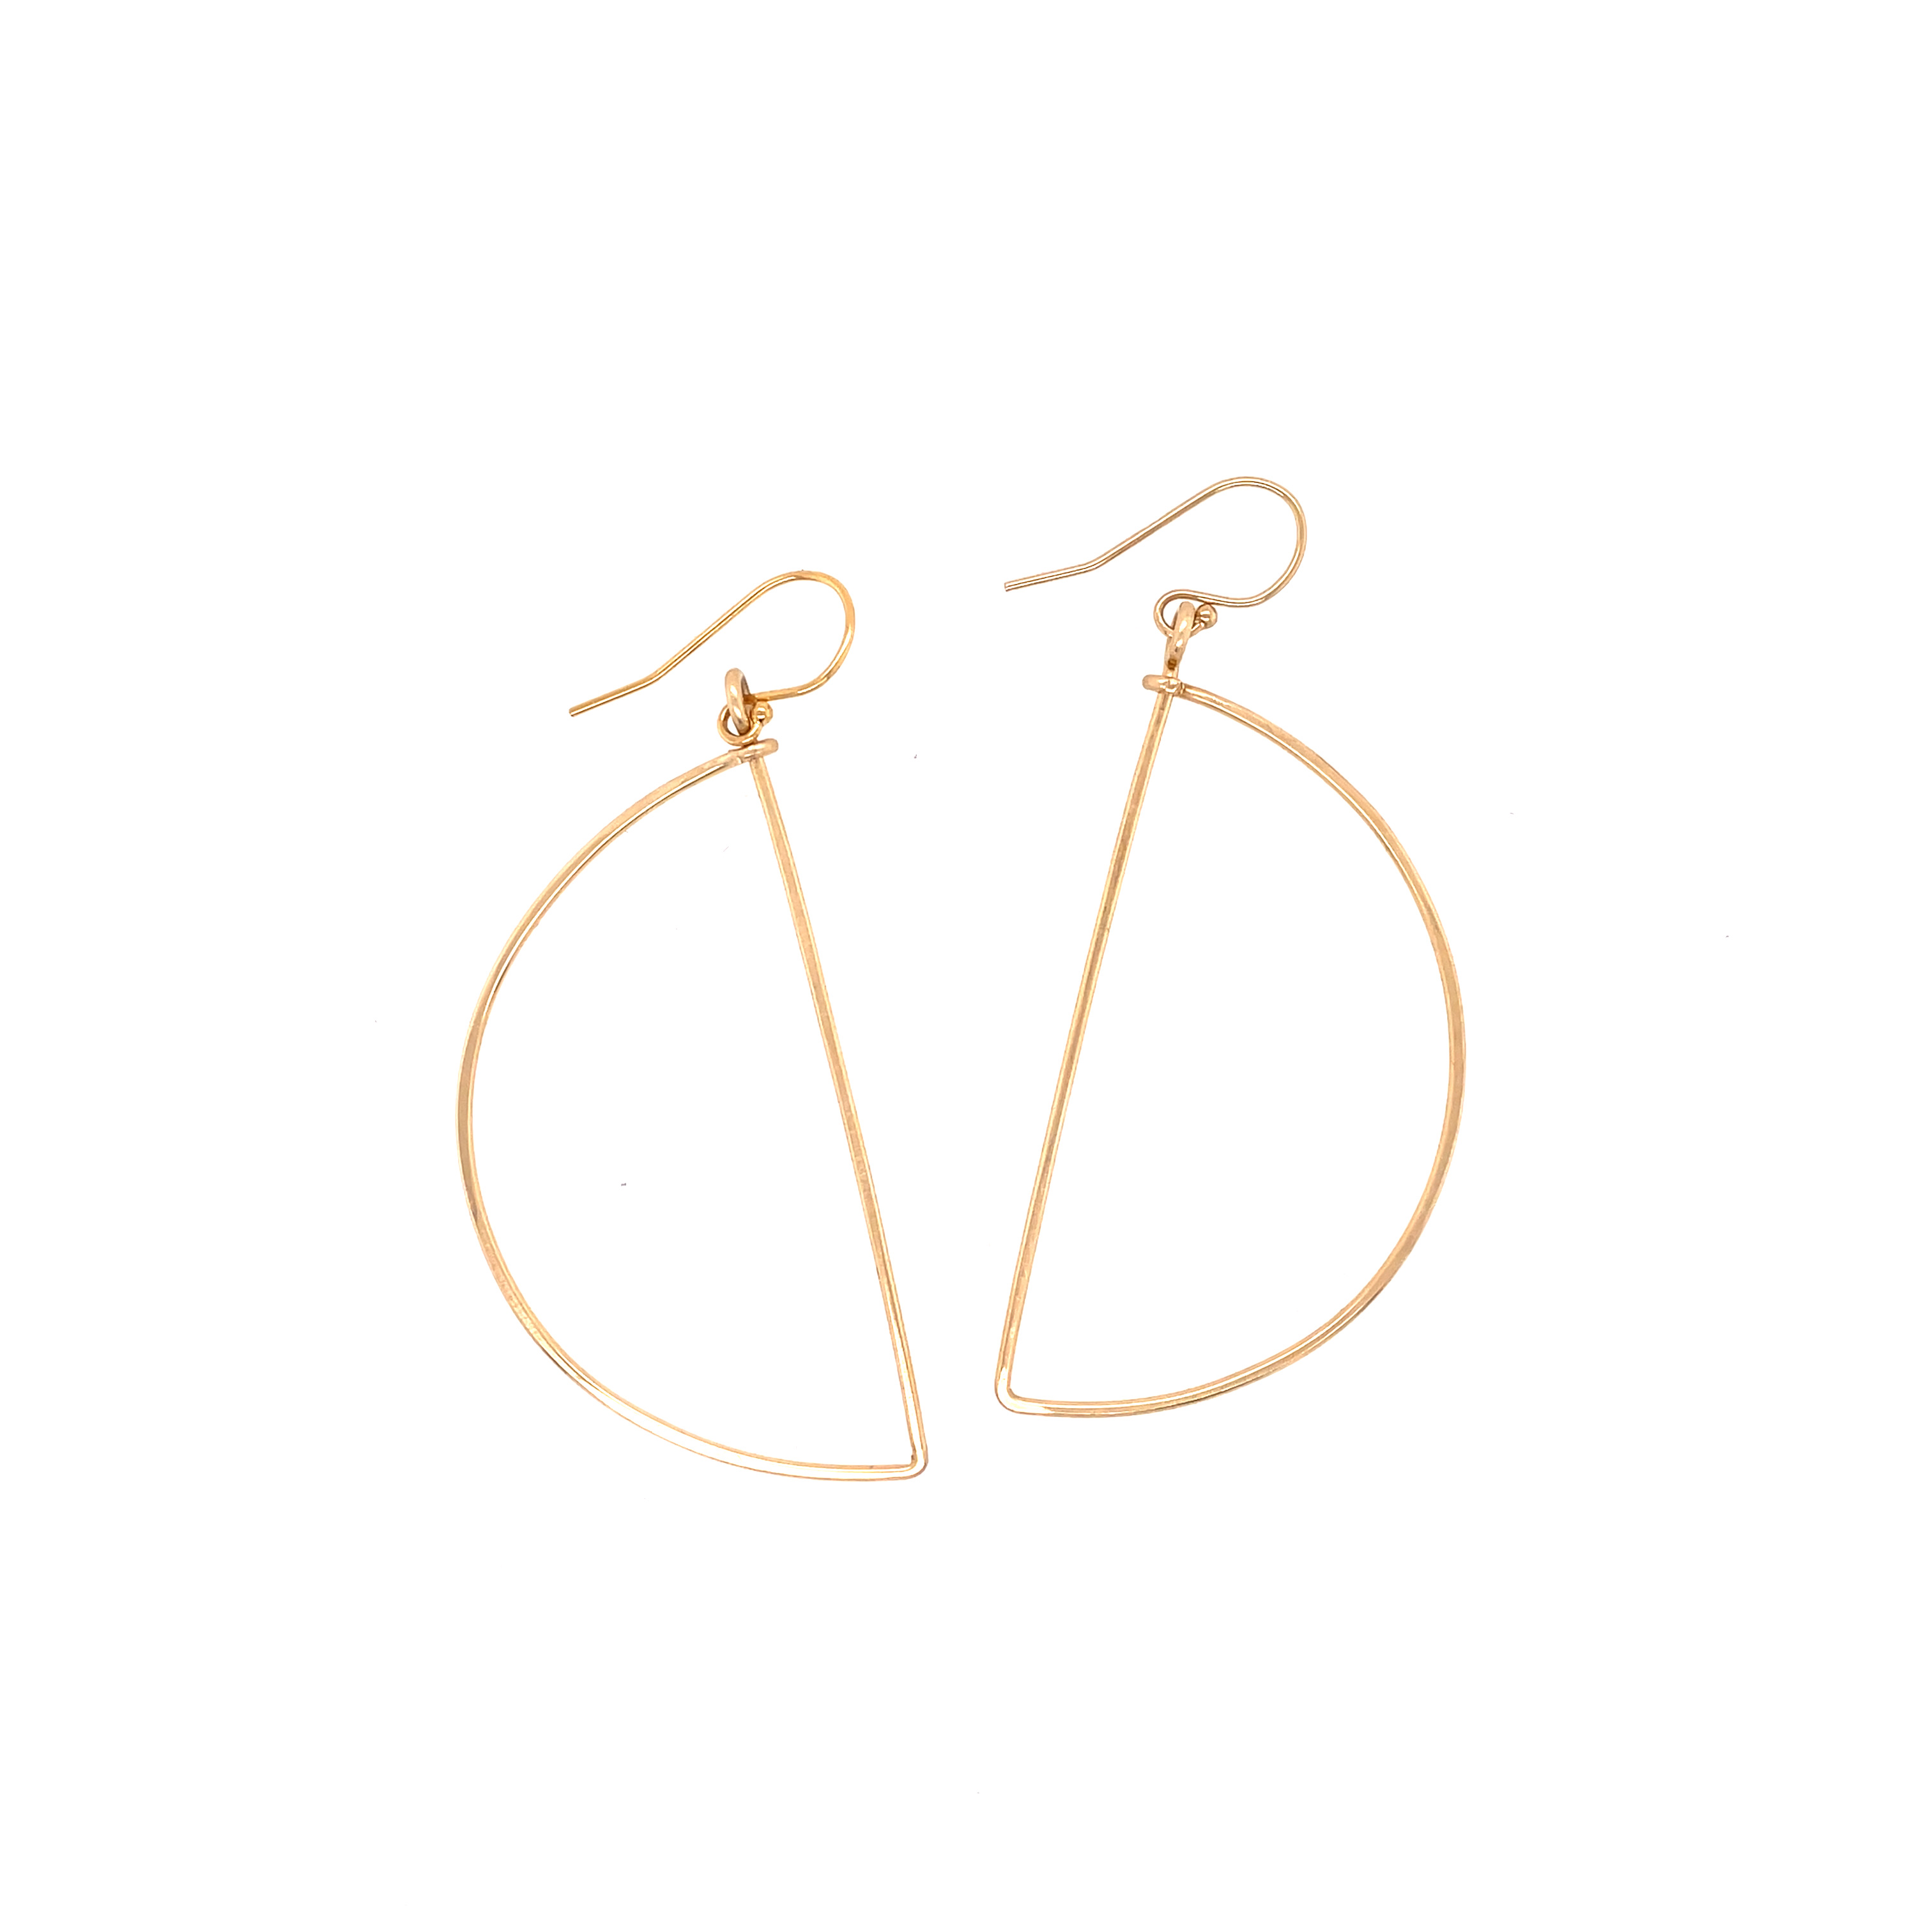 Arch Tilted Hoop Earrings - 14k Gold Fill - Trunk Show